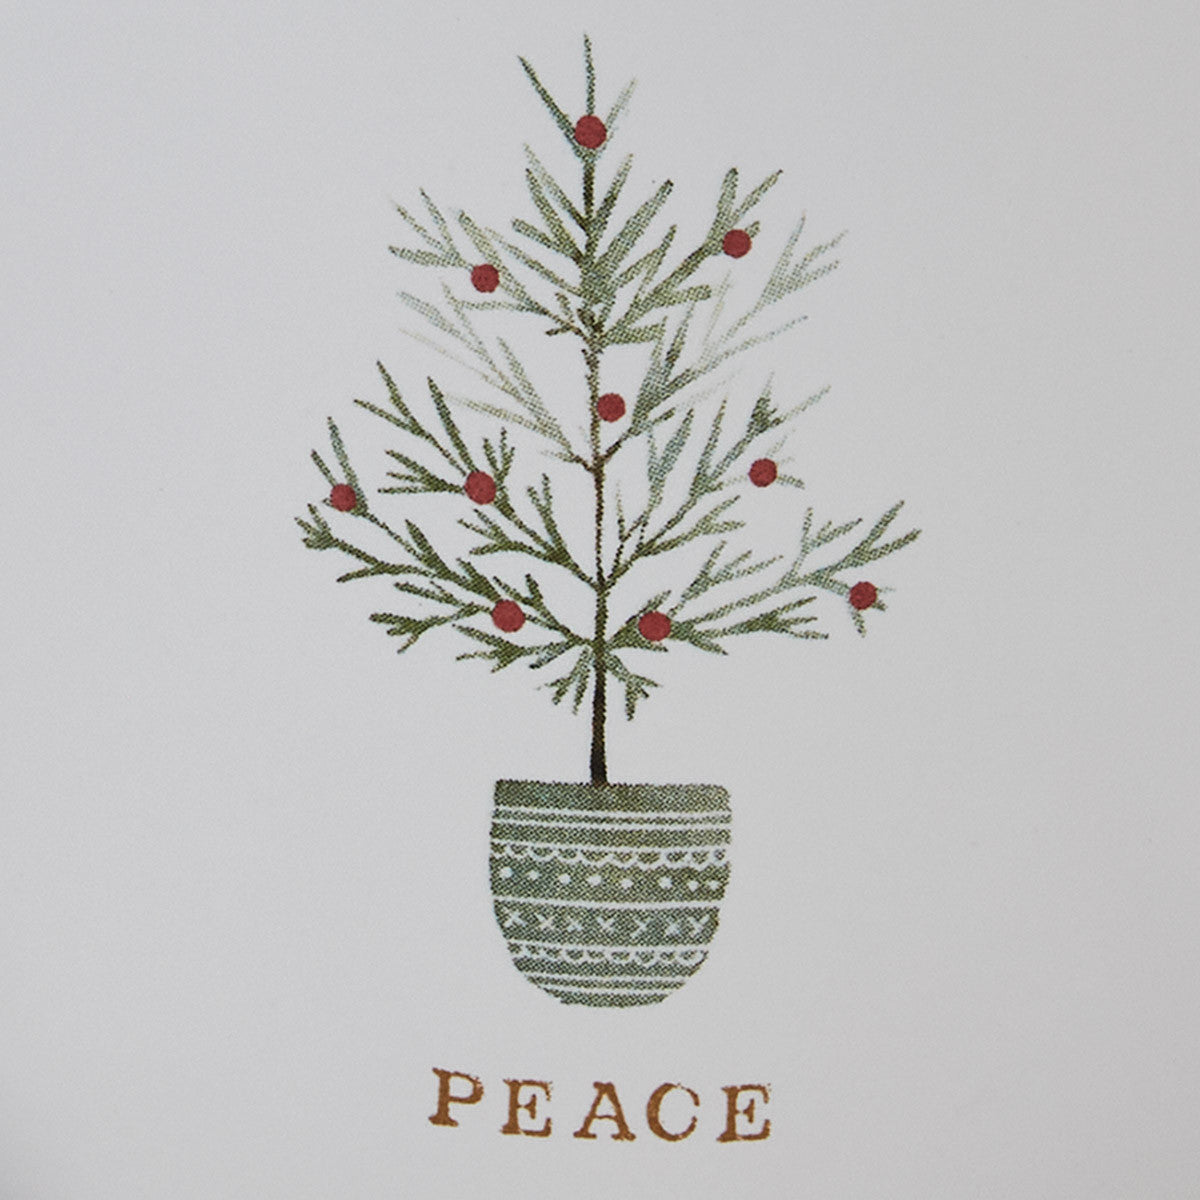 Rustic Christmas Peace Mugs - Set of 4 Park Designs